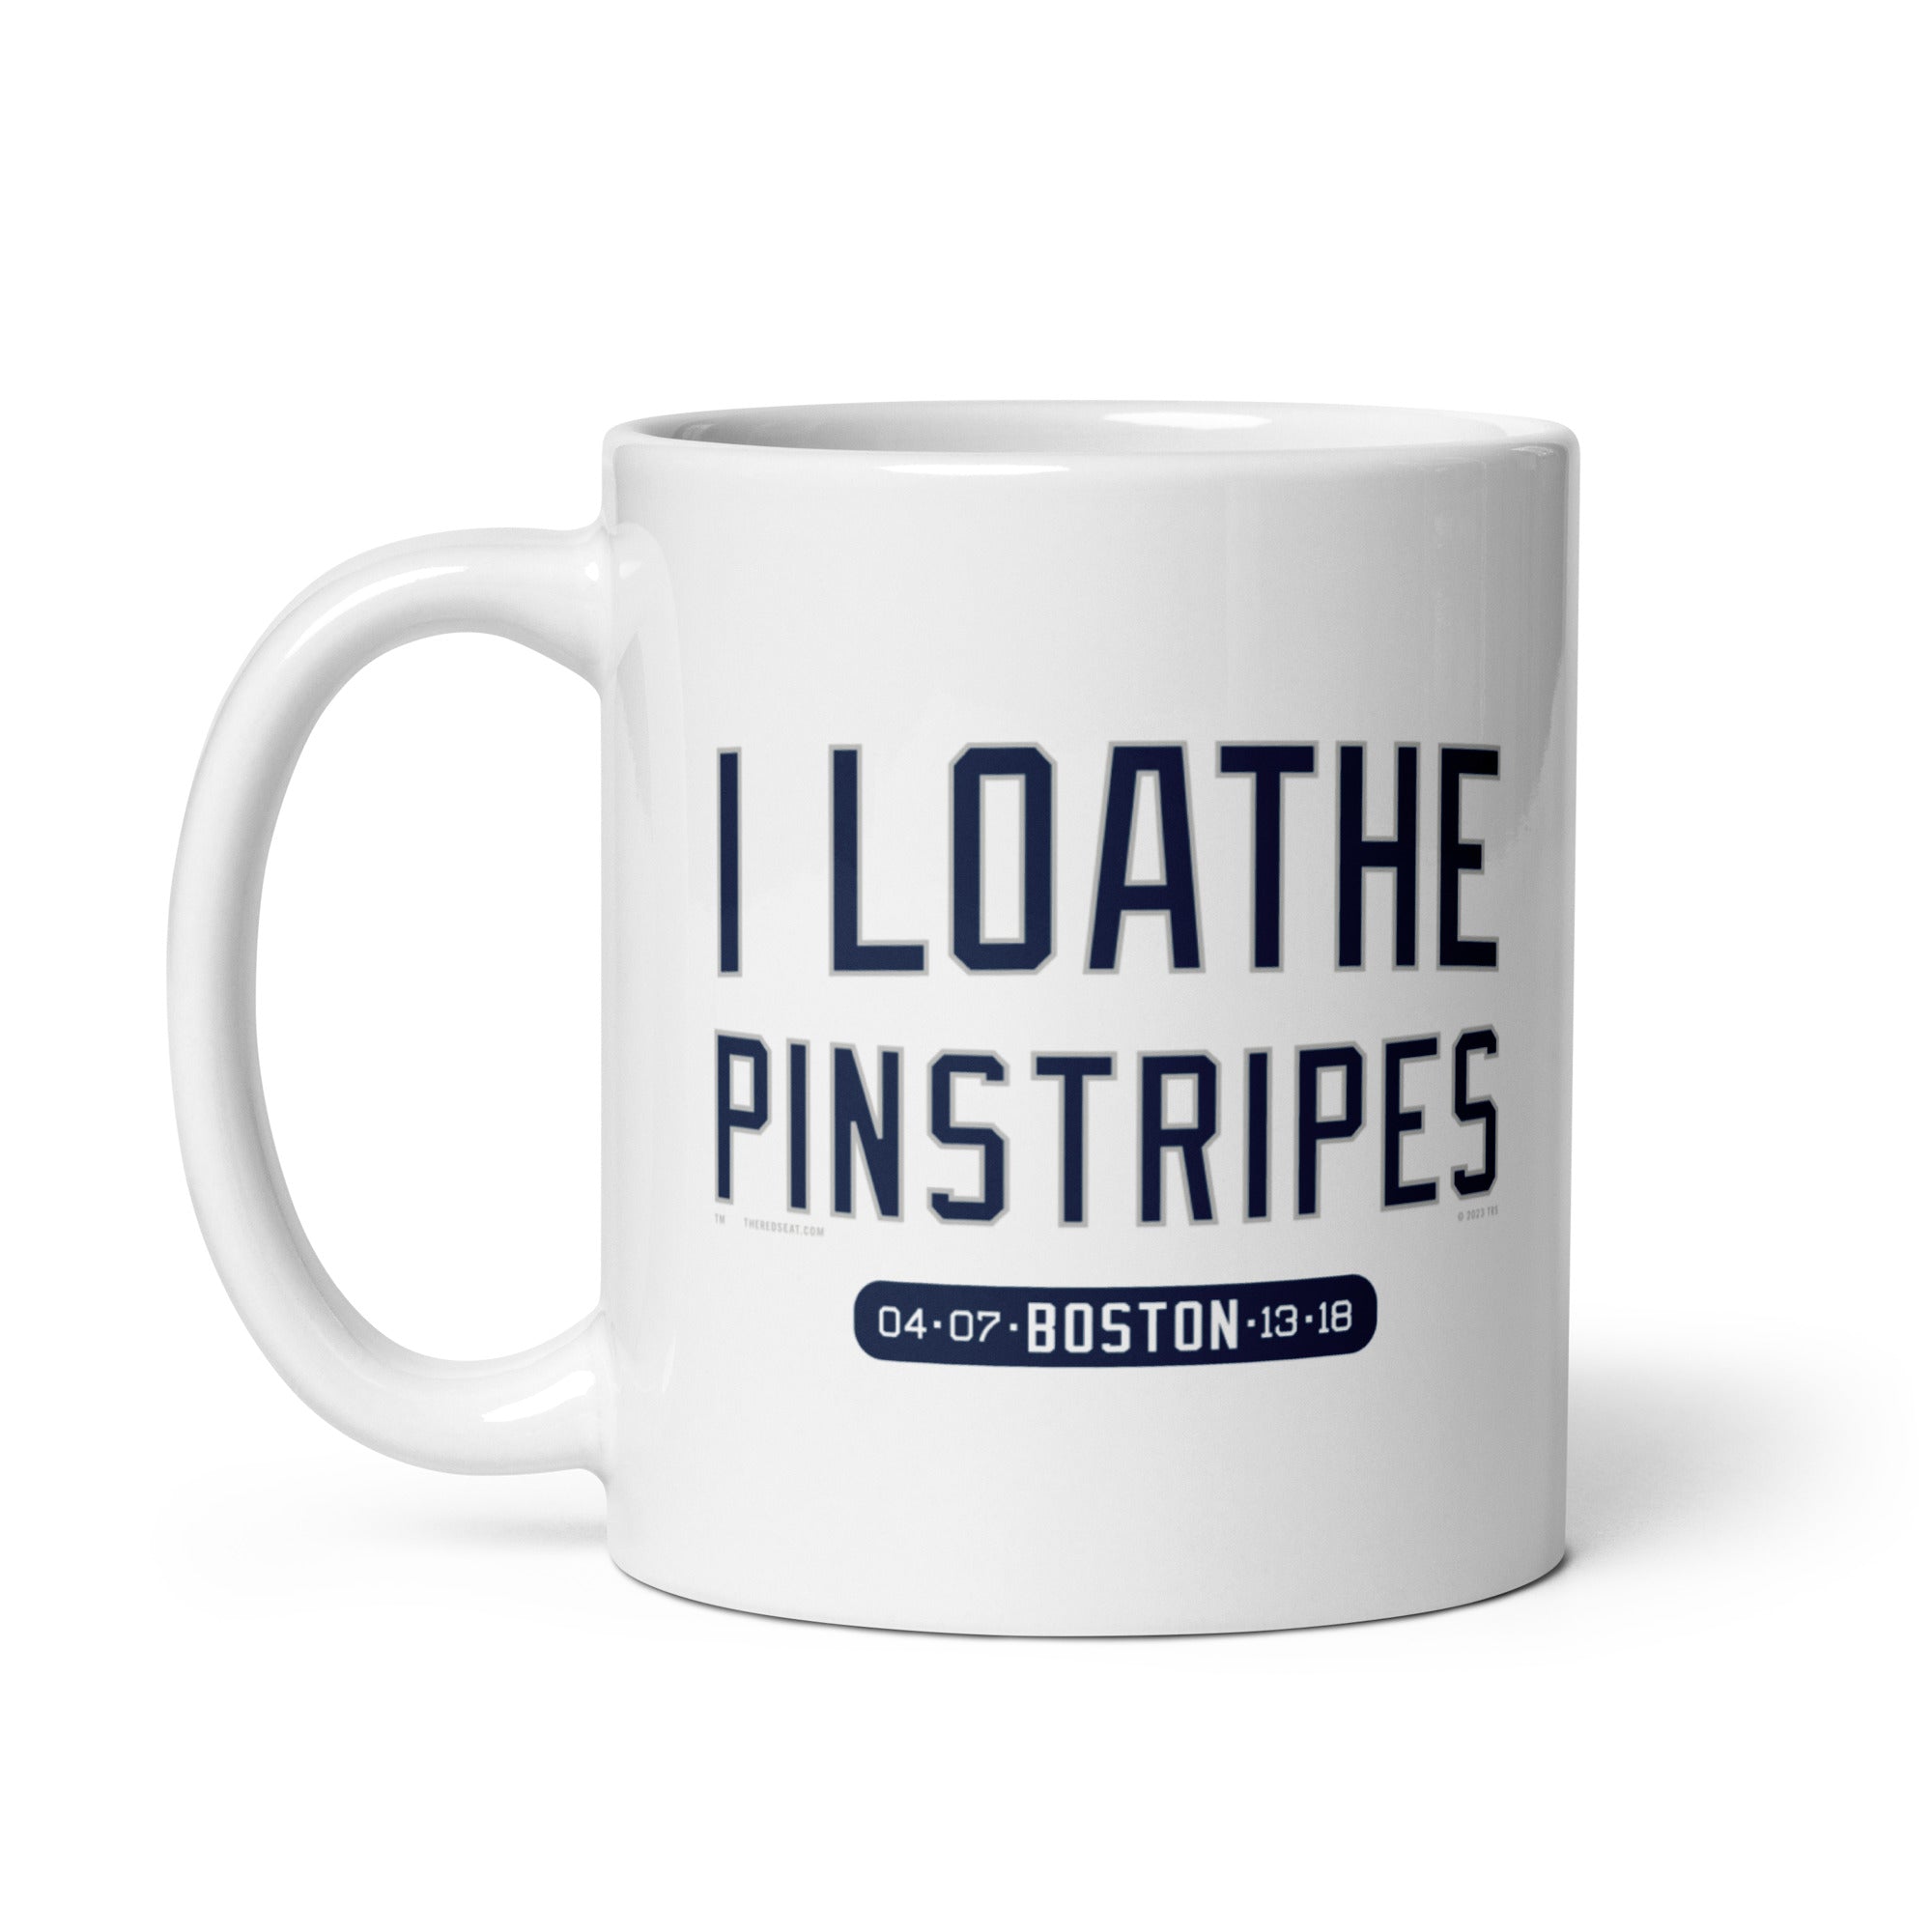 I Loathe Pinstripes, 11oz. Mug